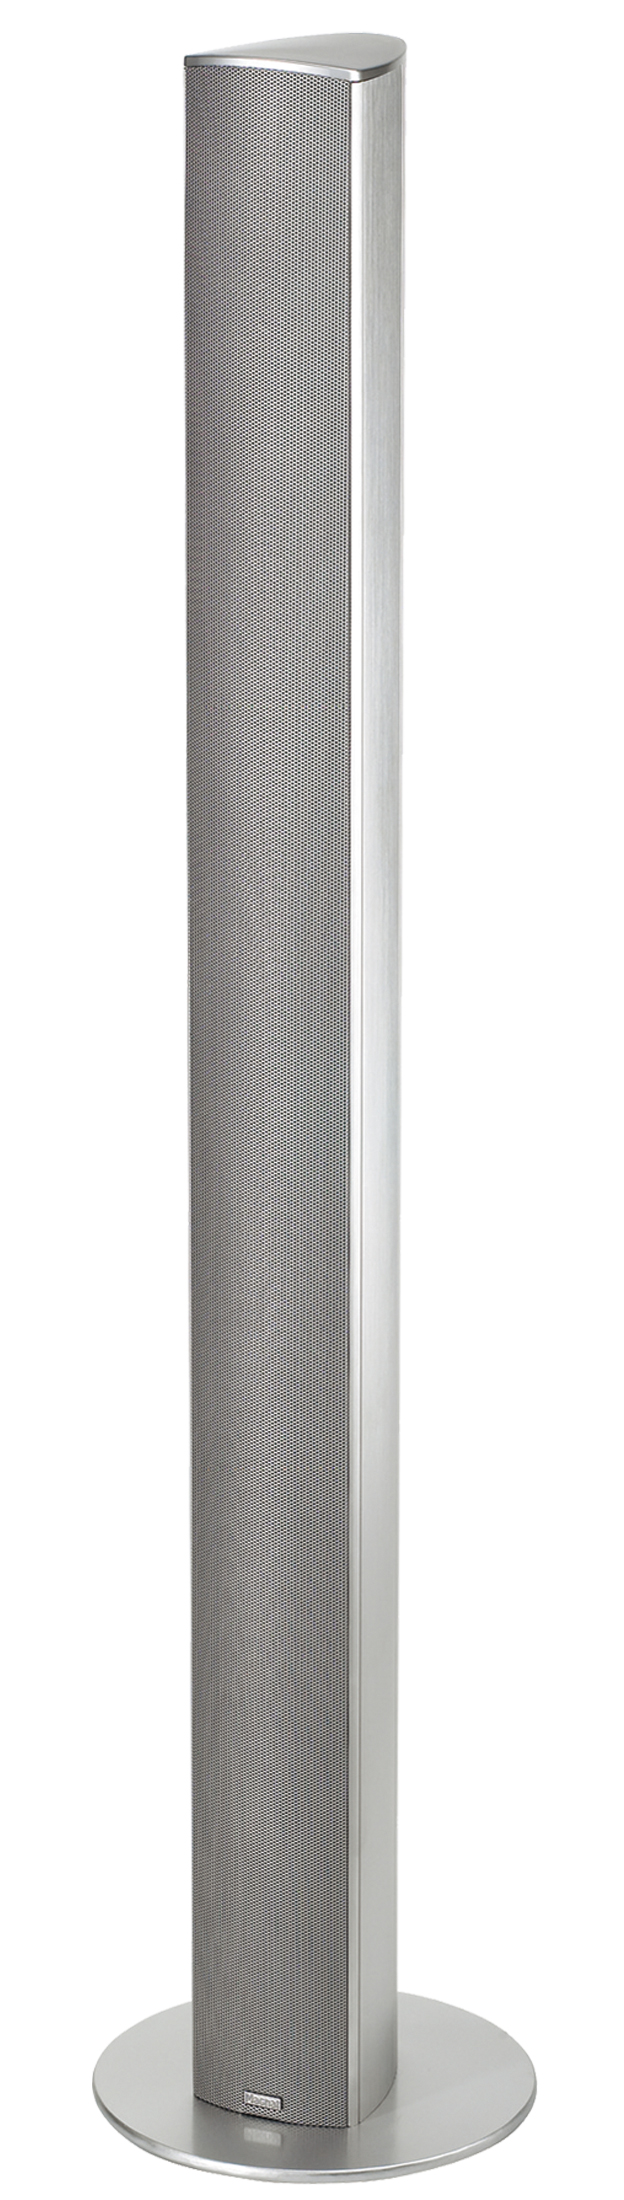 Luidspreker Magnat Needle Super Alu Tower zilver aluminium 4018843890586